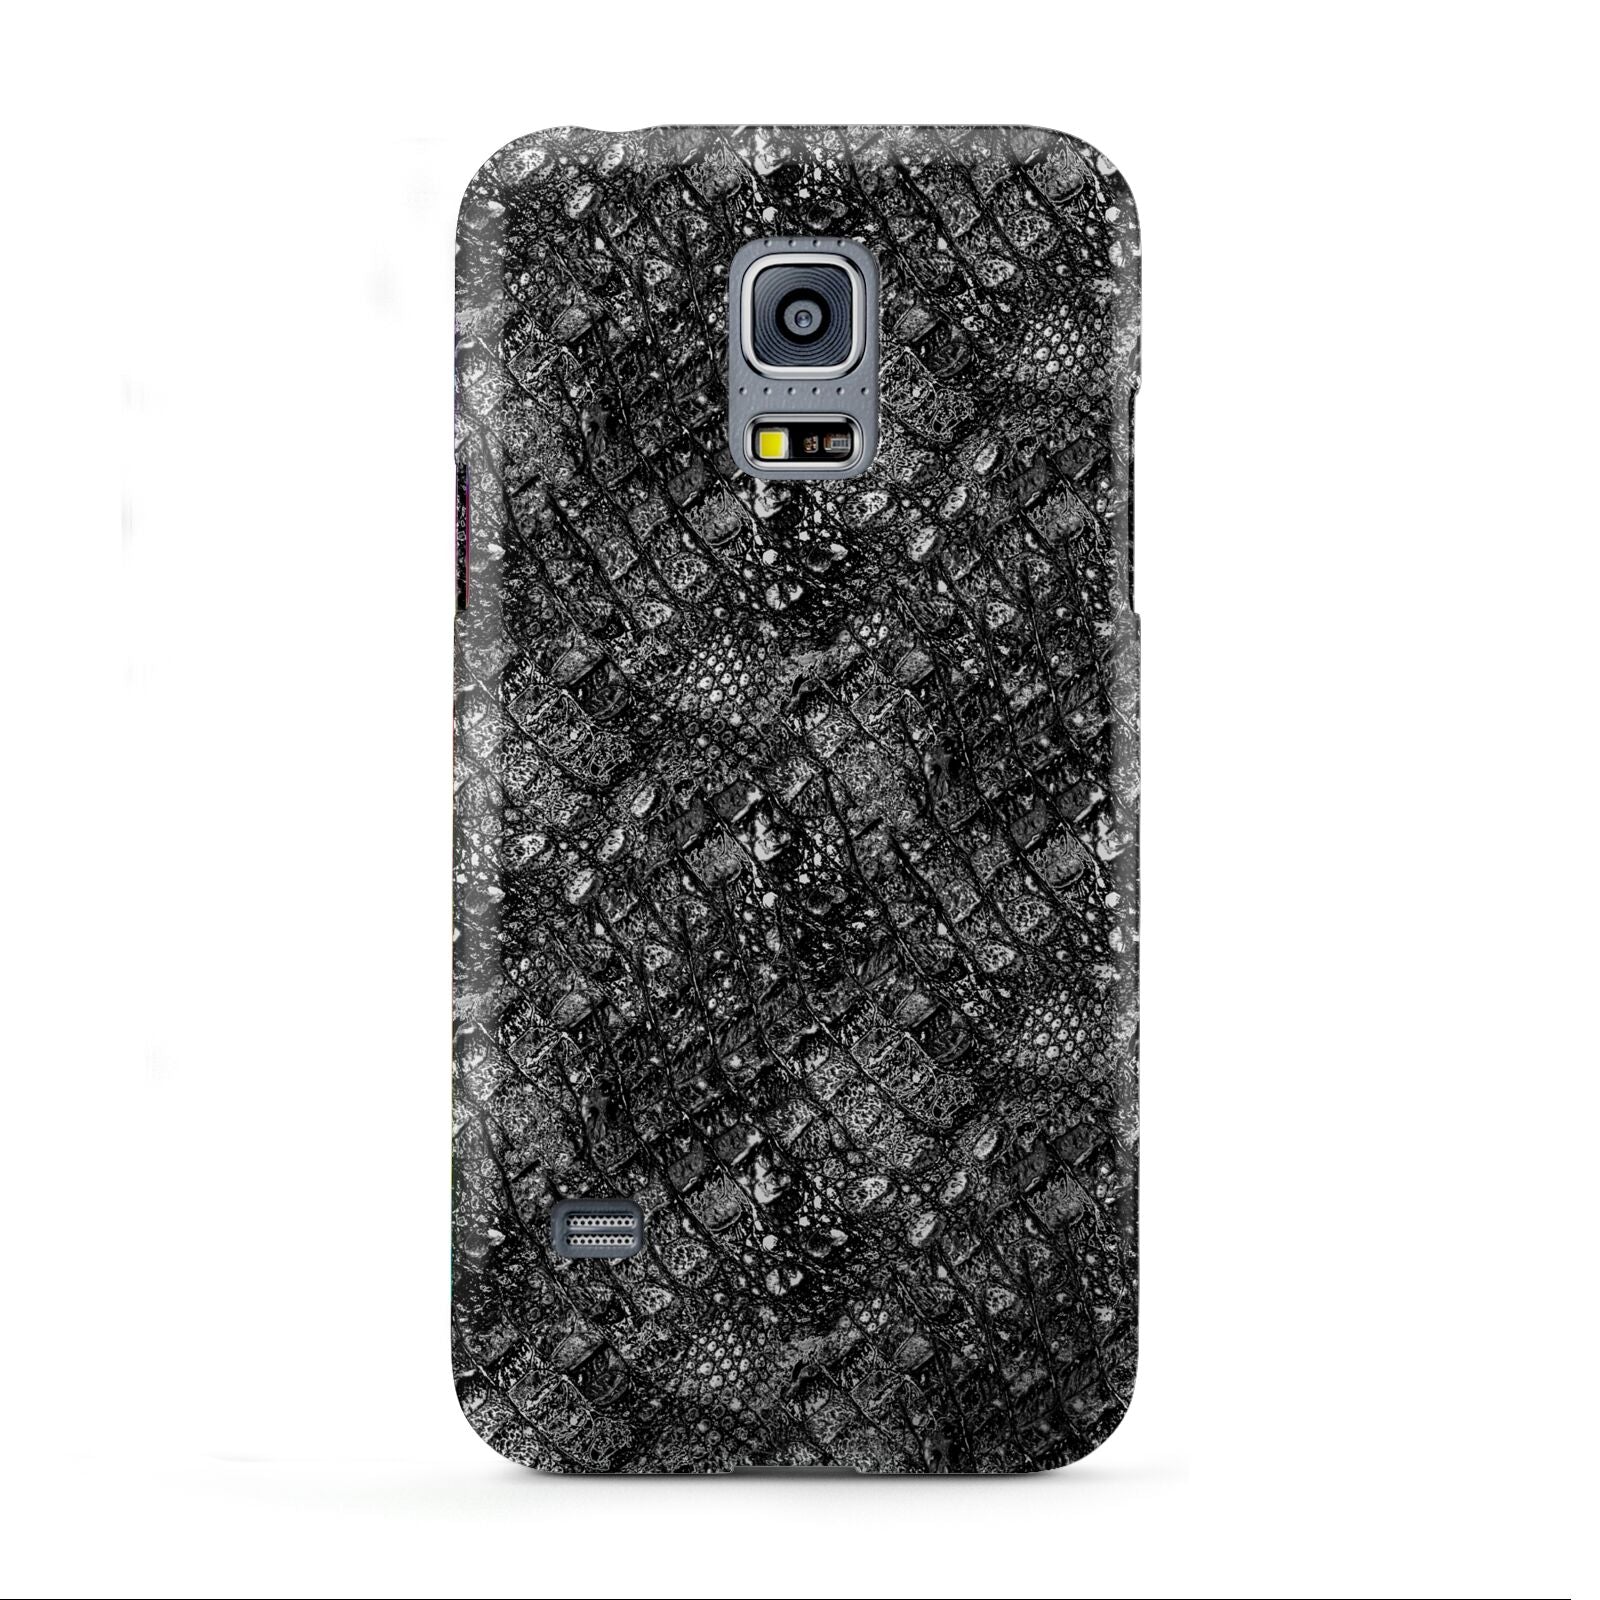 Snakeskin Design Samsung Galaxy S5 Mini Case